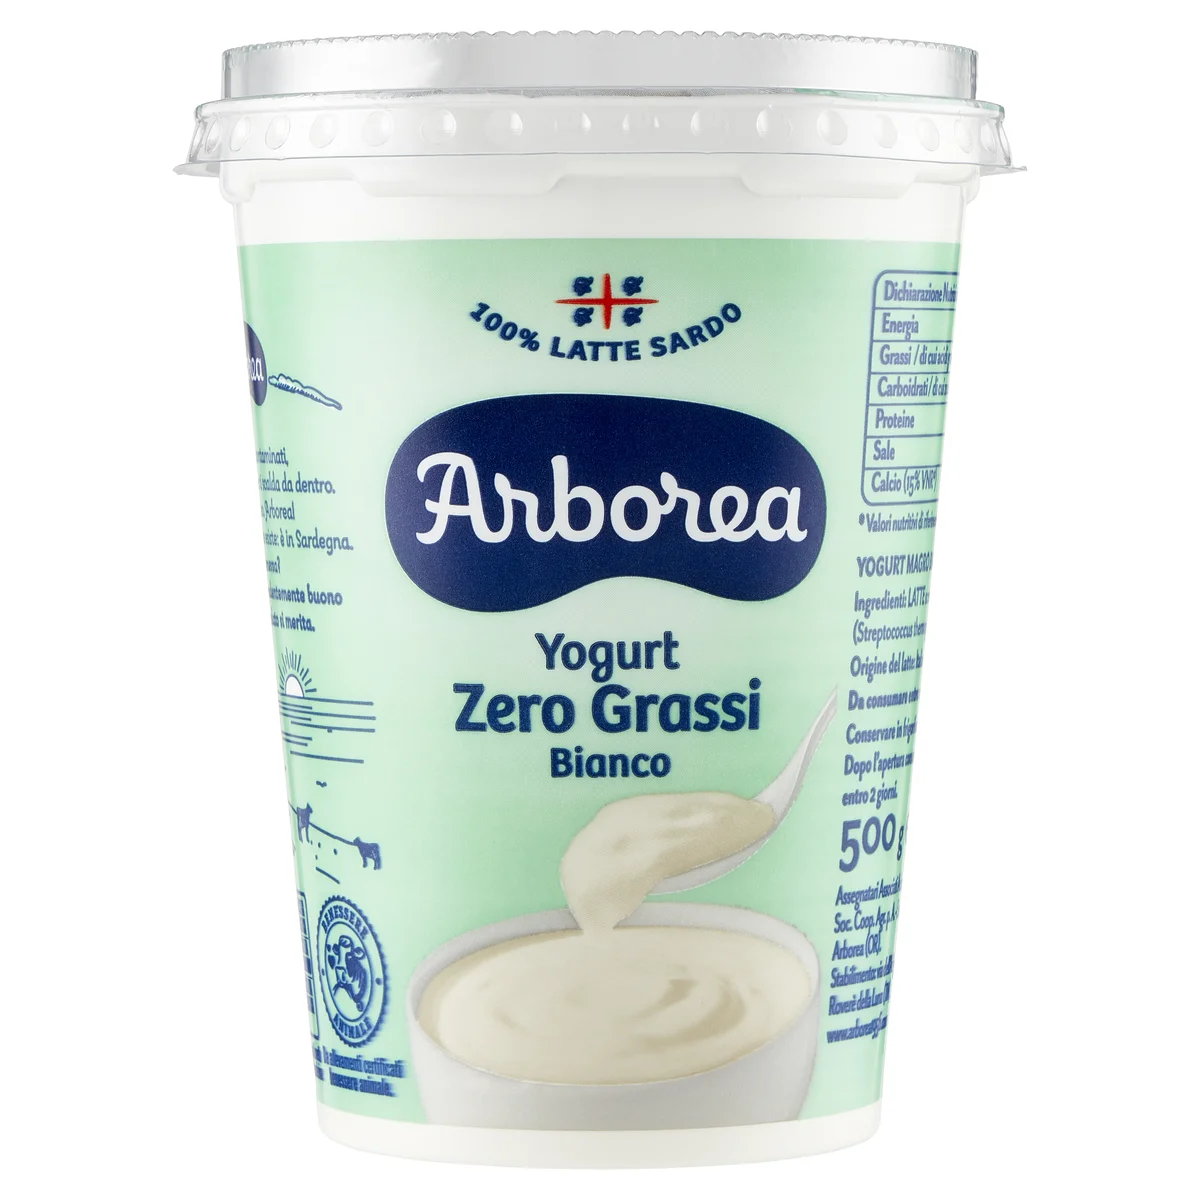 Arborea Yogurt Zero Grassi Bianco 500 g